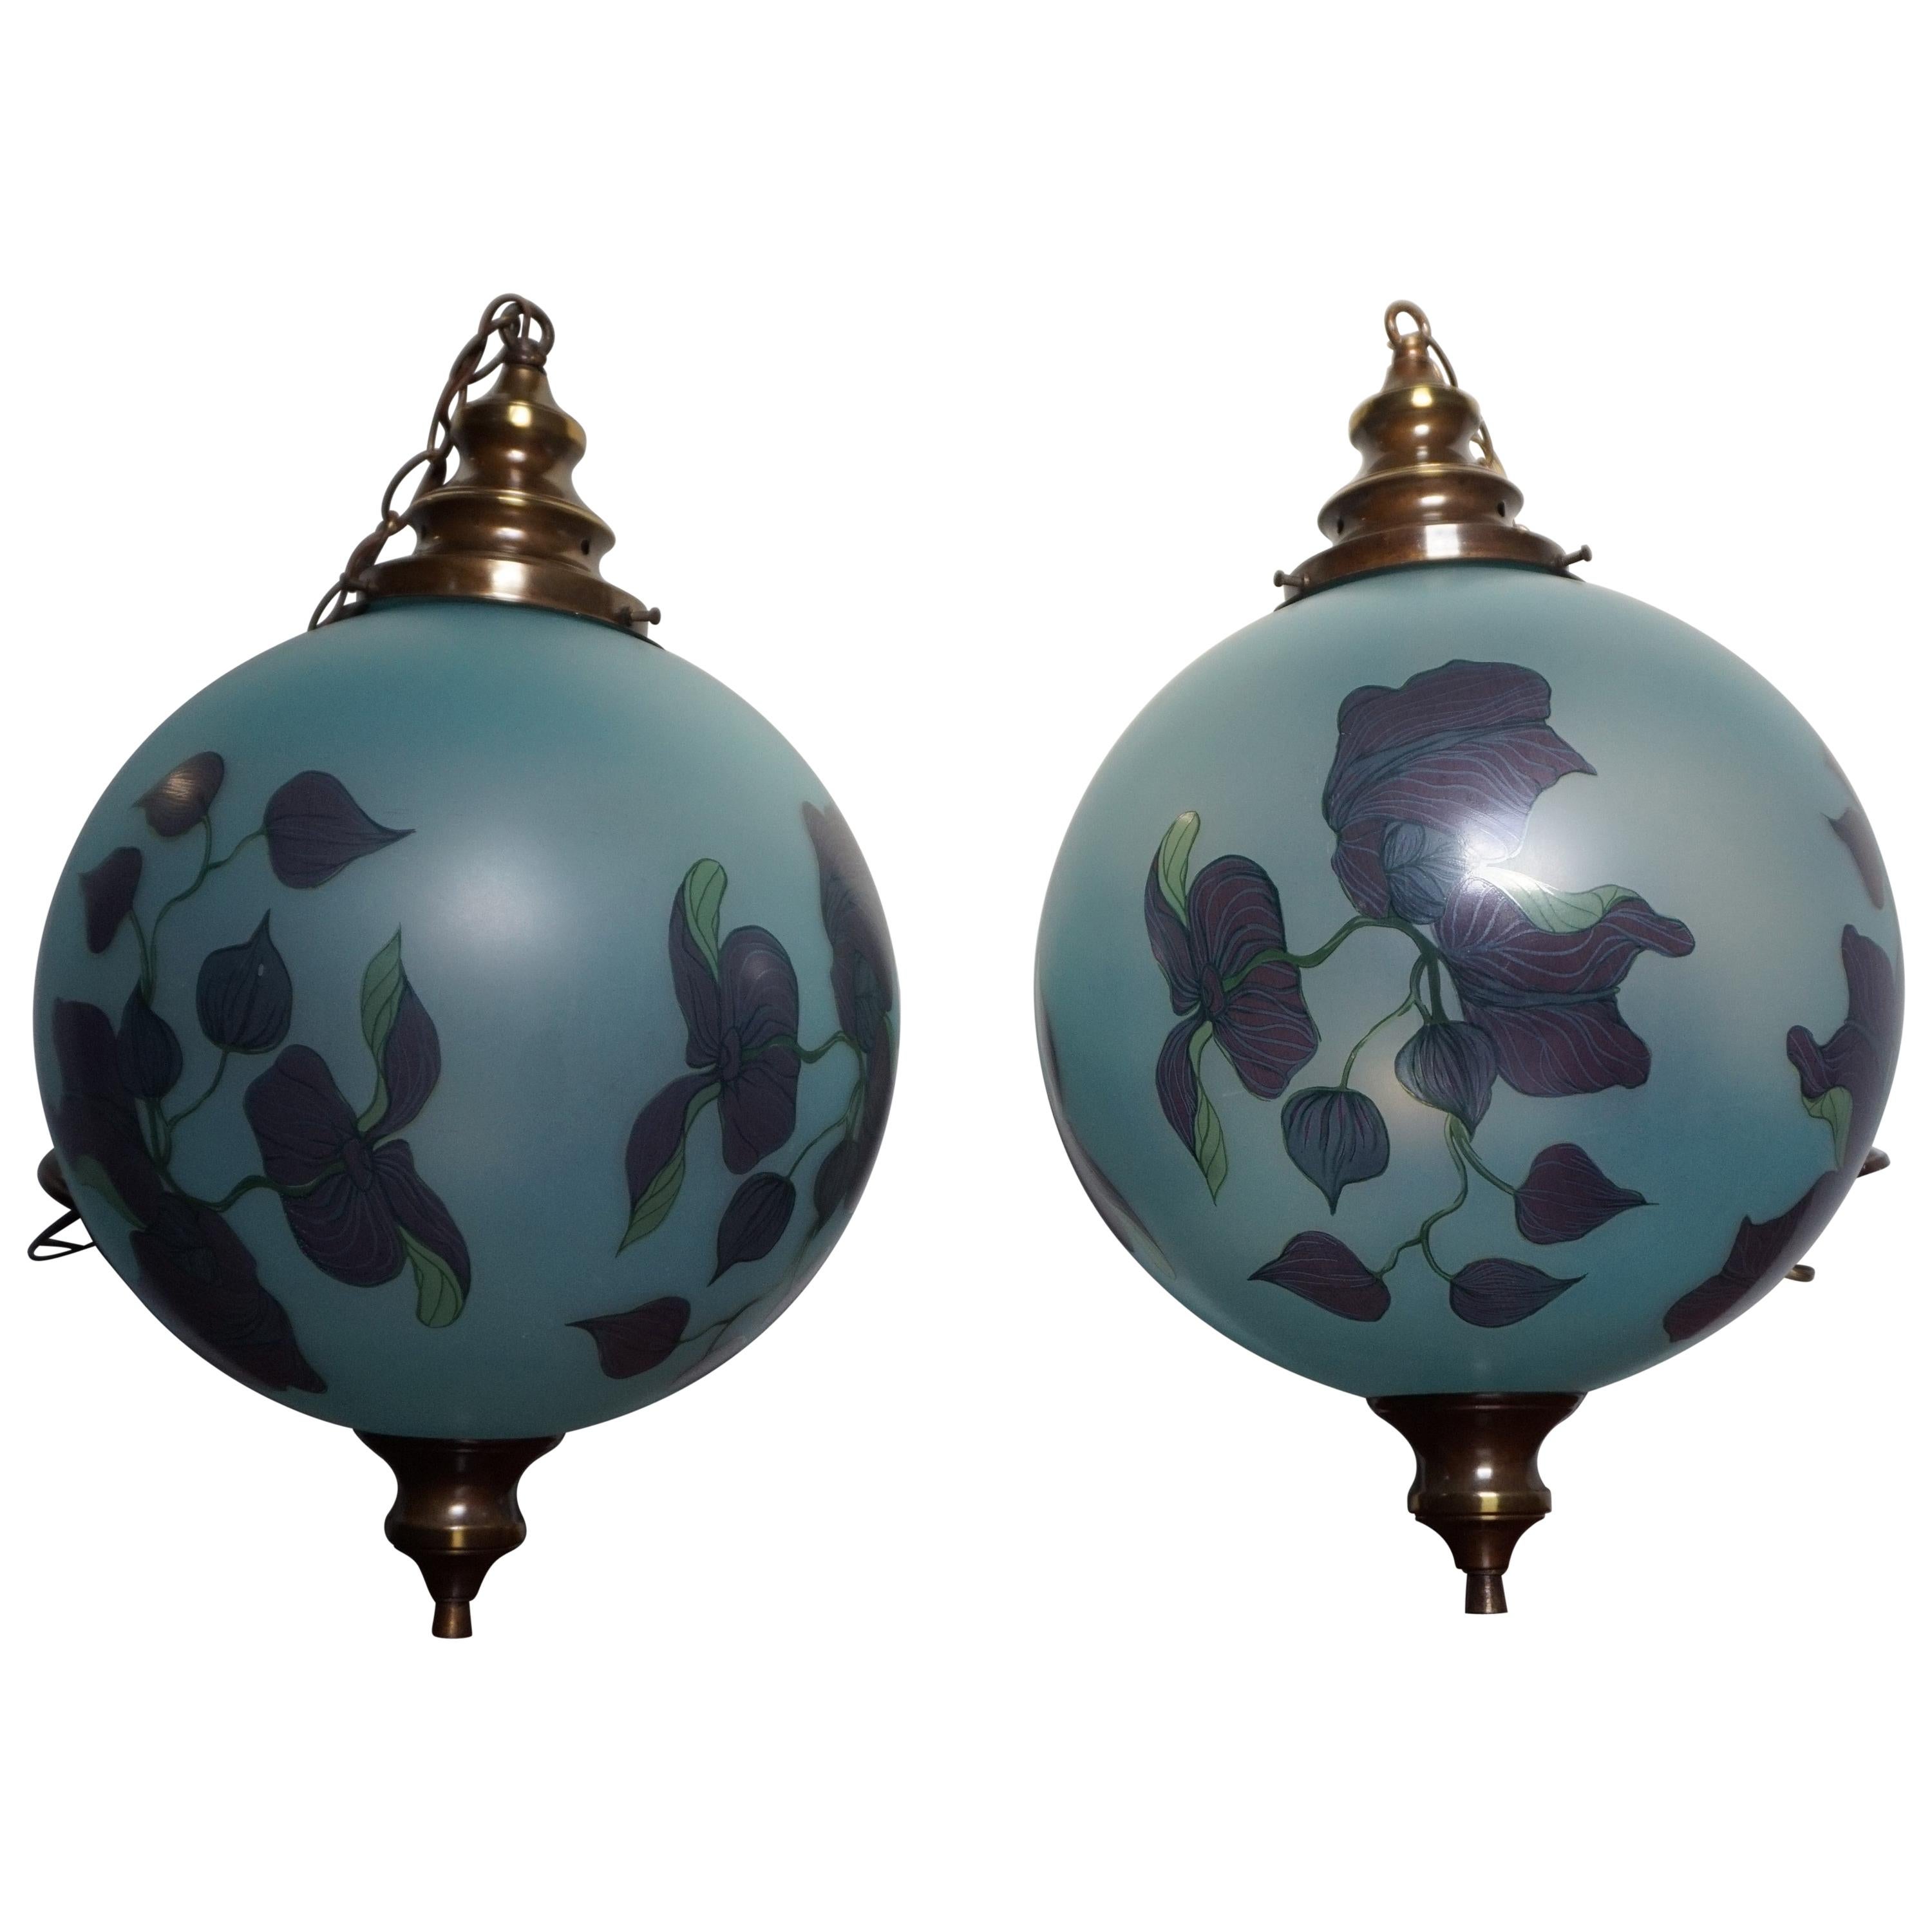 Rare Pair of Midcentury Made Glass Globe Pendant Lights with Jugendstil Flowers